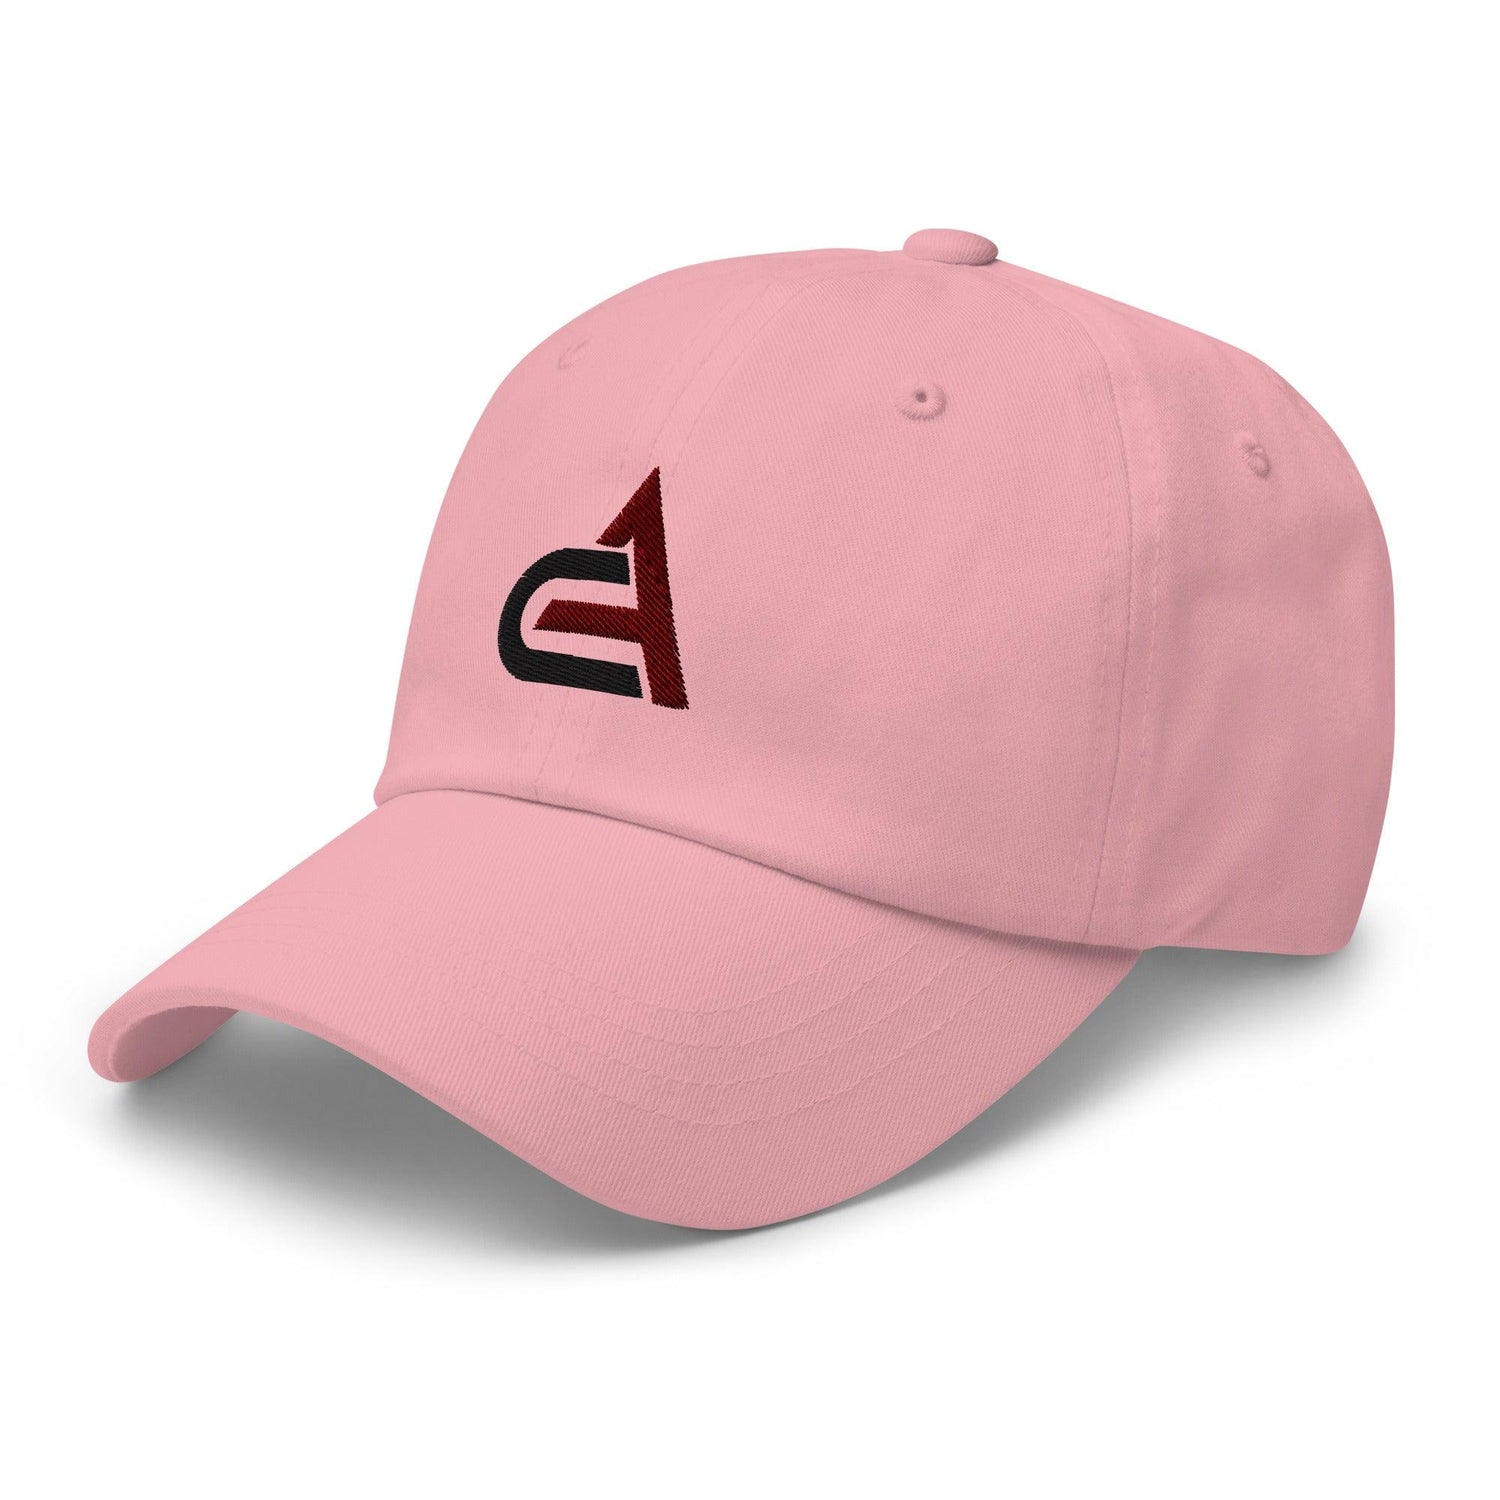 Cade Austin "Elite" hat - Fan Arch